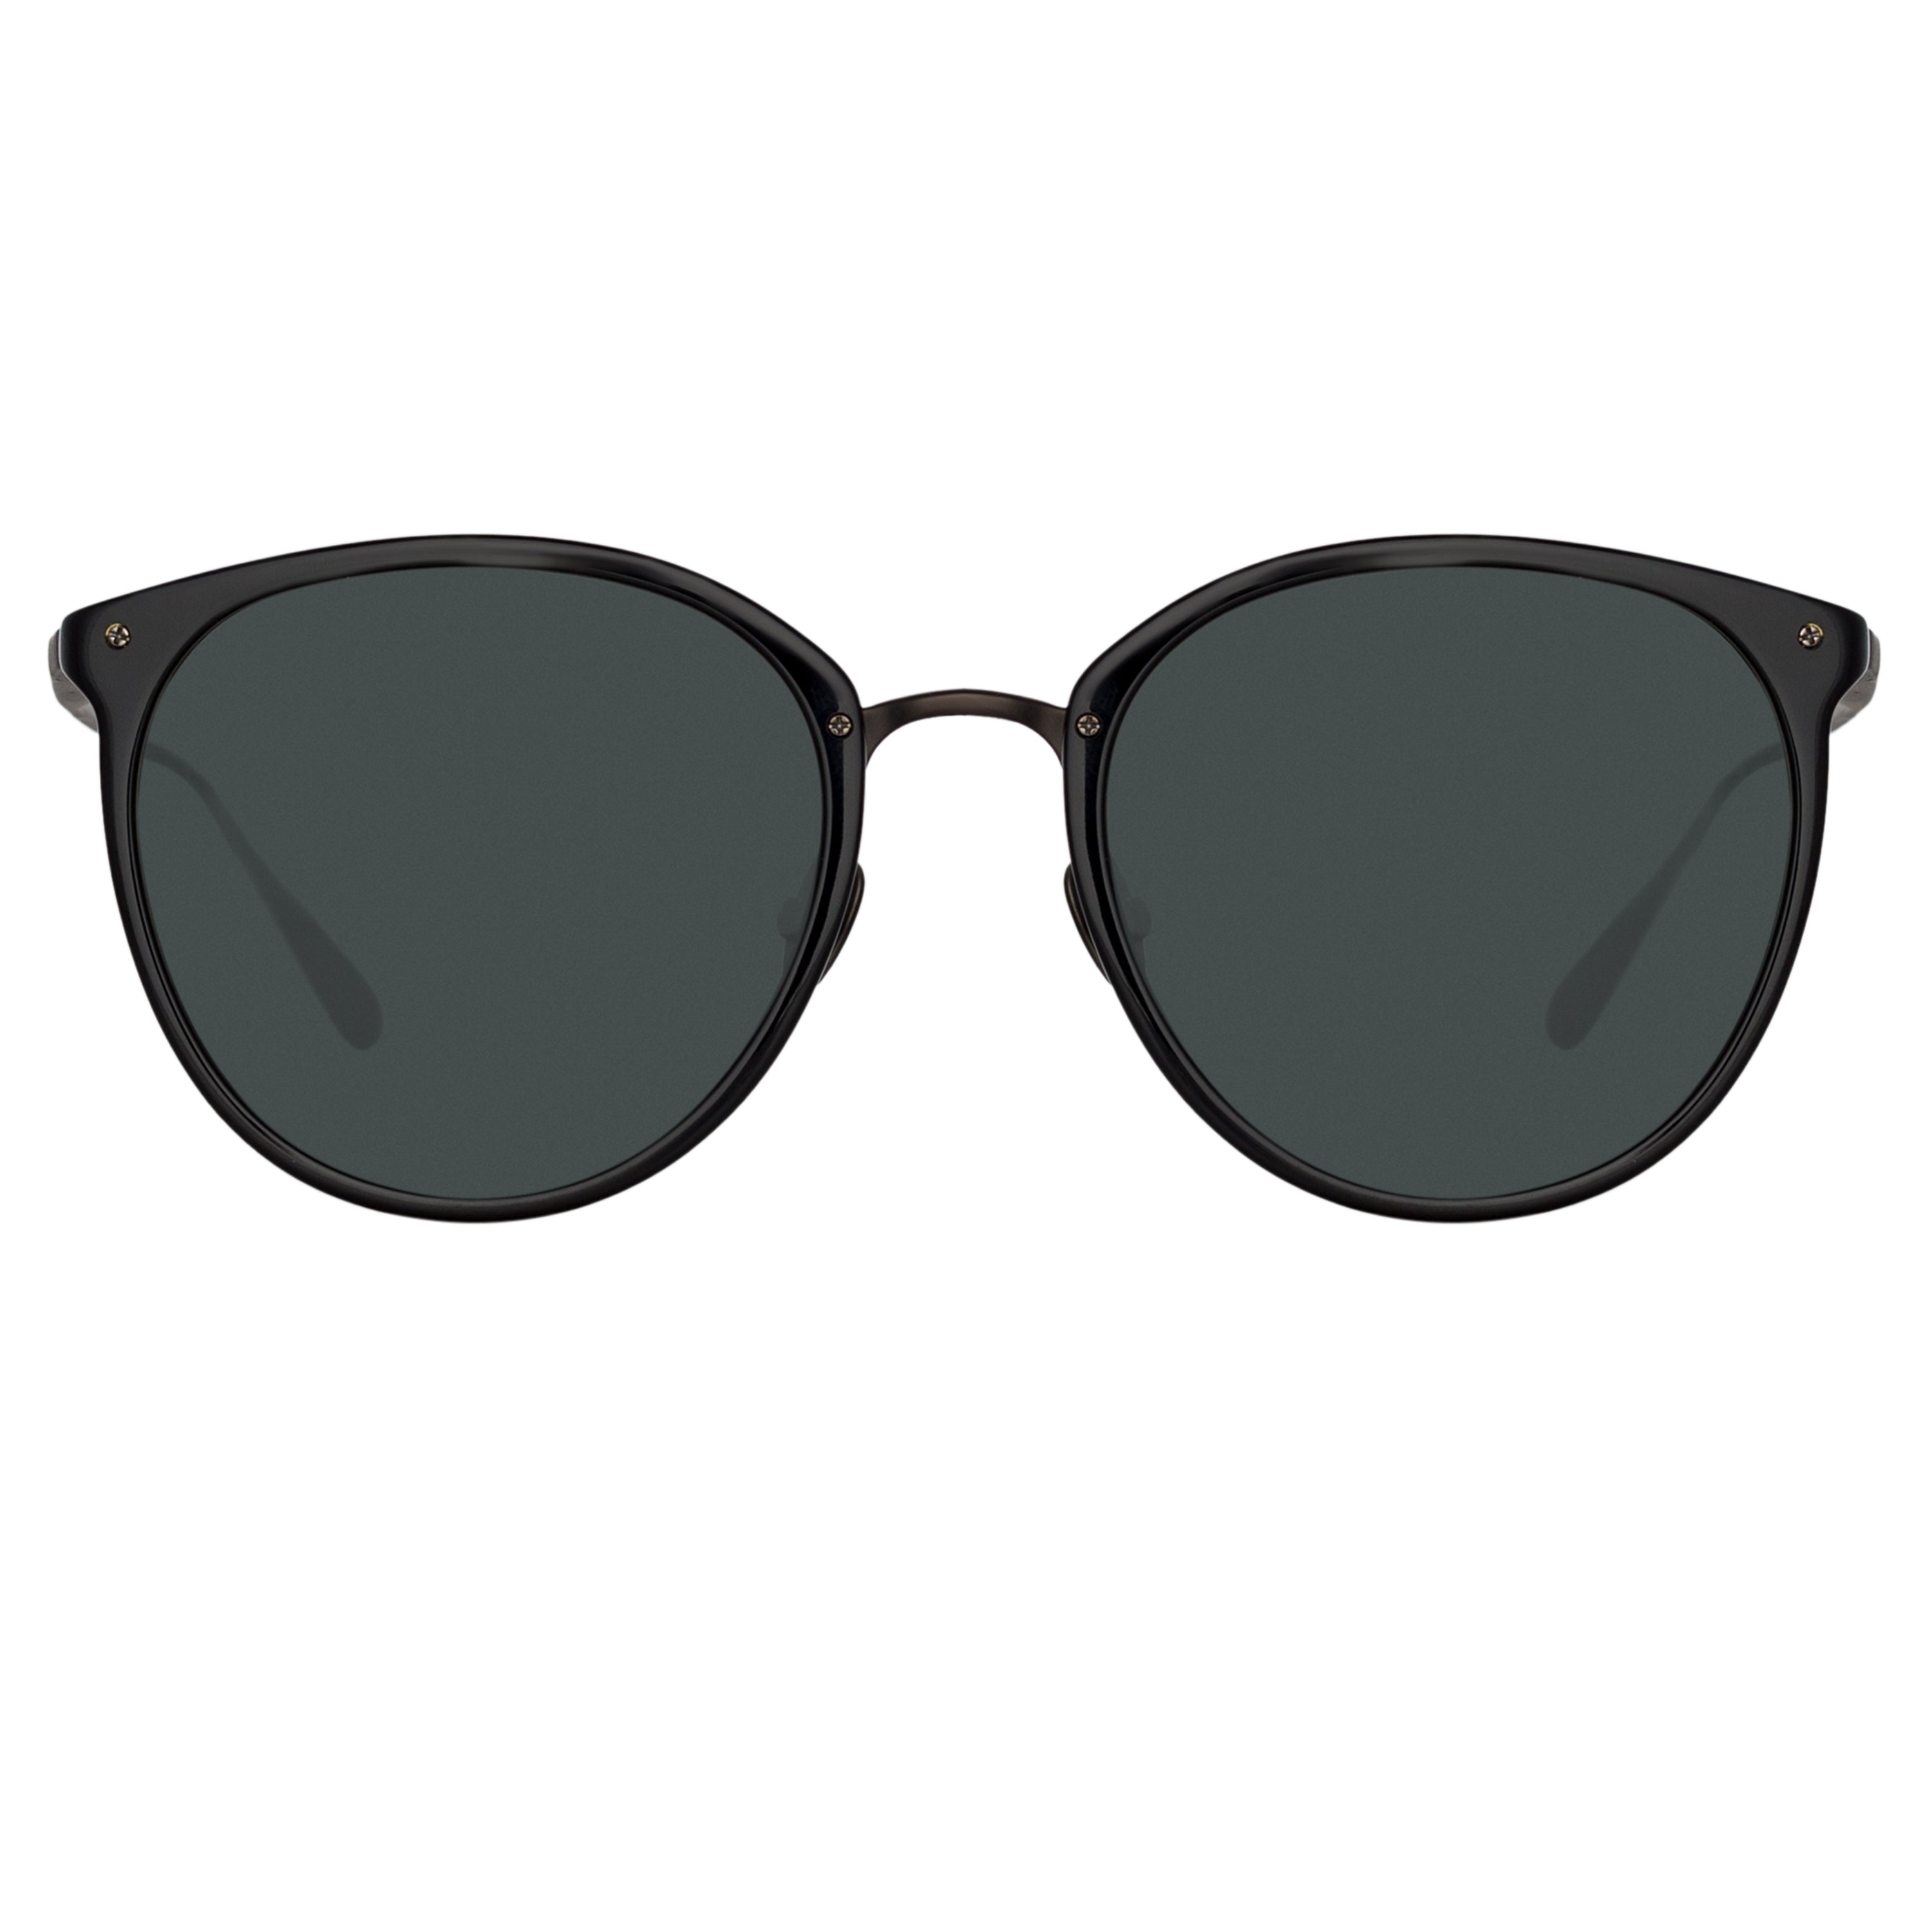 Calthorpe Oval Sunglasses in Black and Matt Nickel by LINDA 